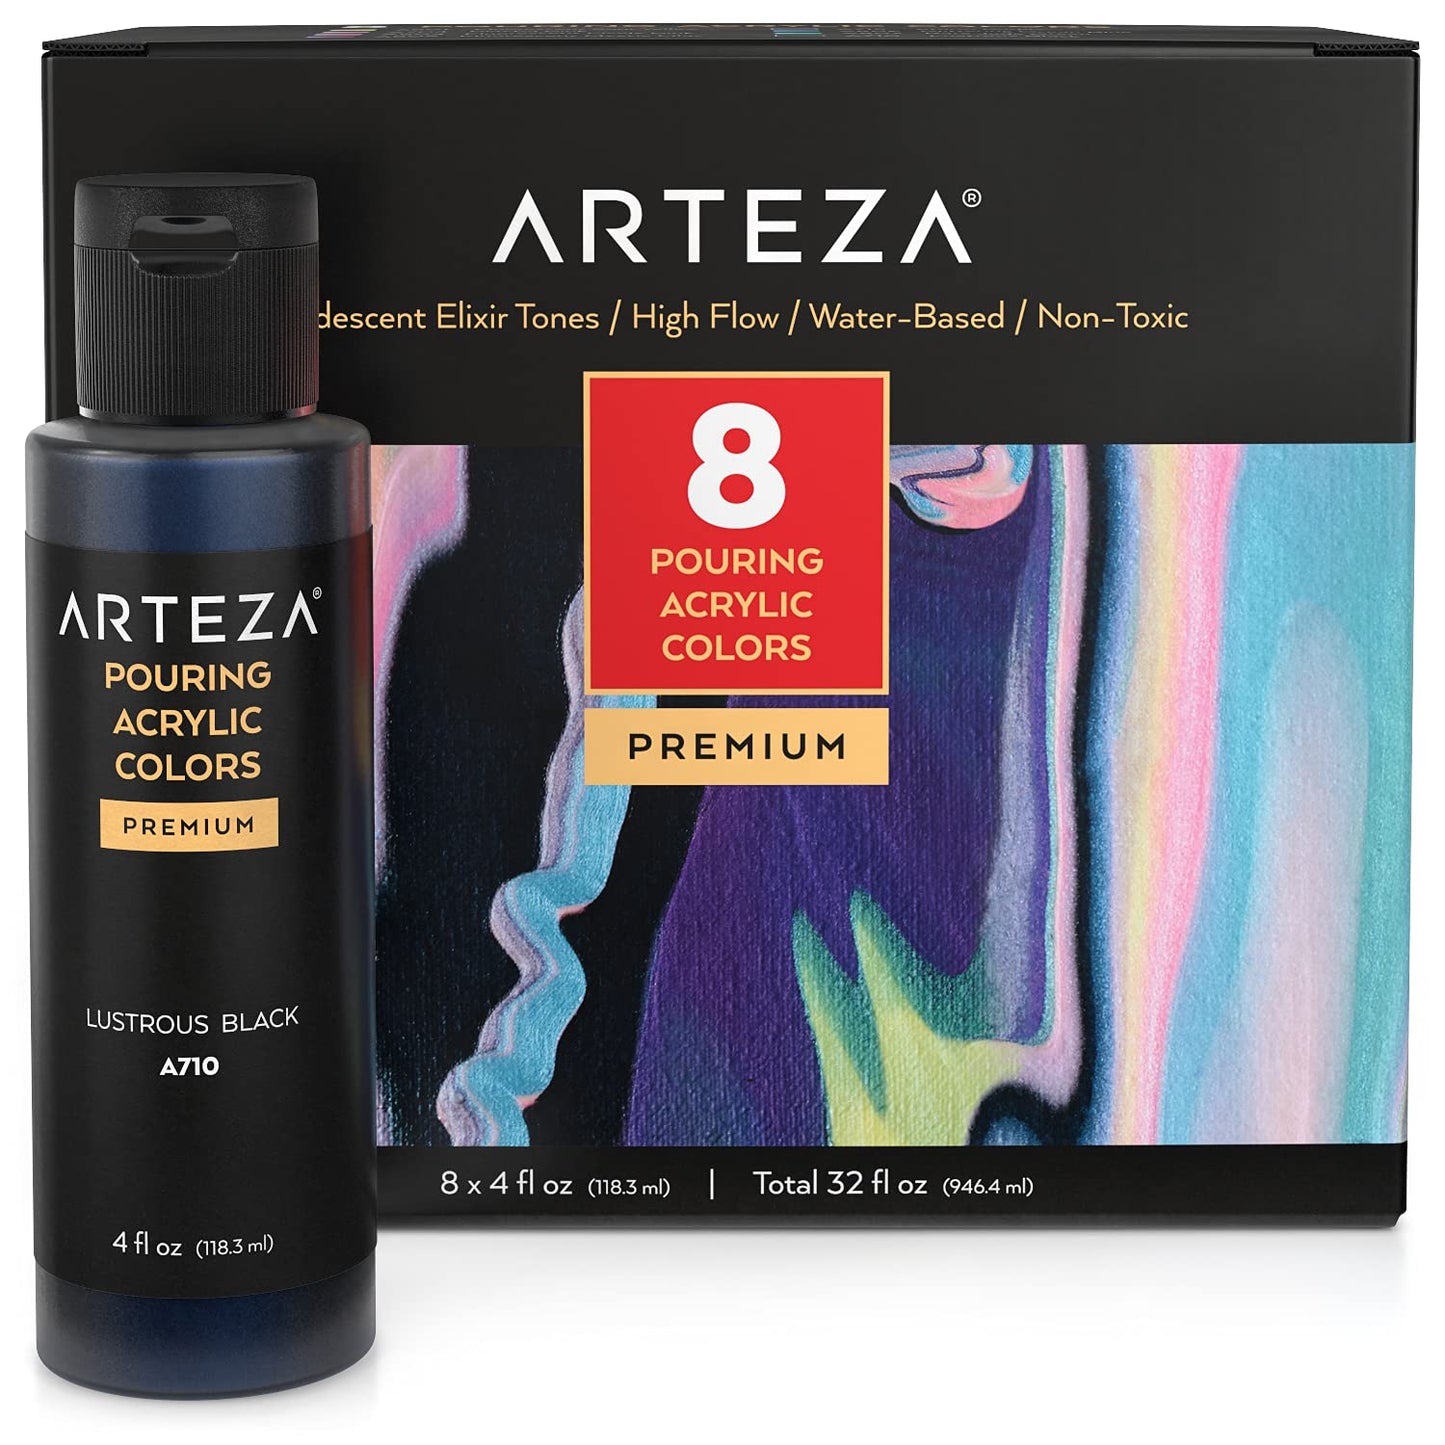 Arteza Pouring Acrylic Paints, Iridescent Elixir Tones, 4oz Bottles - Set of 8